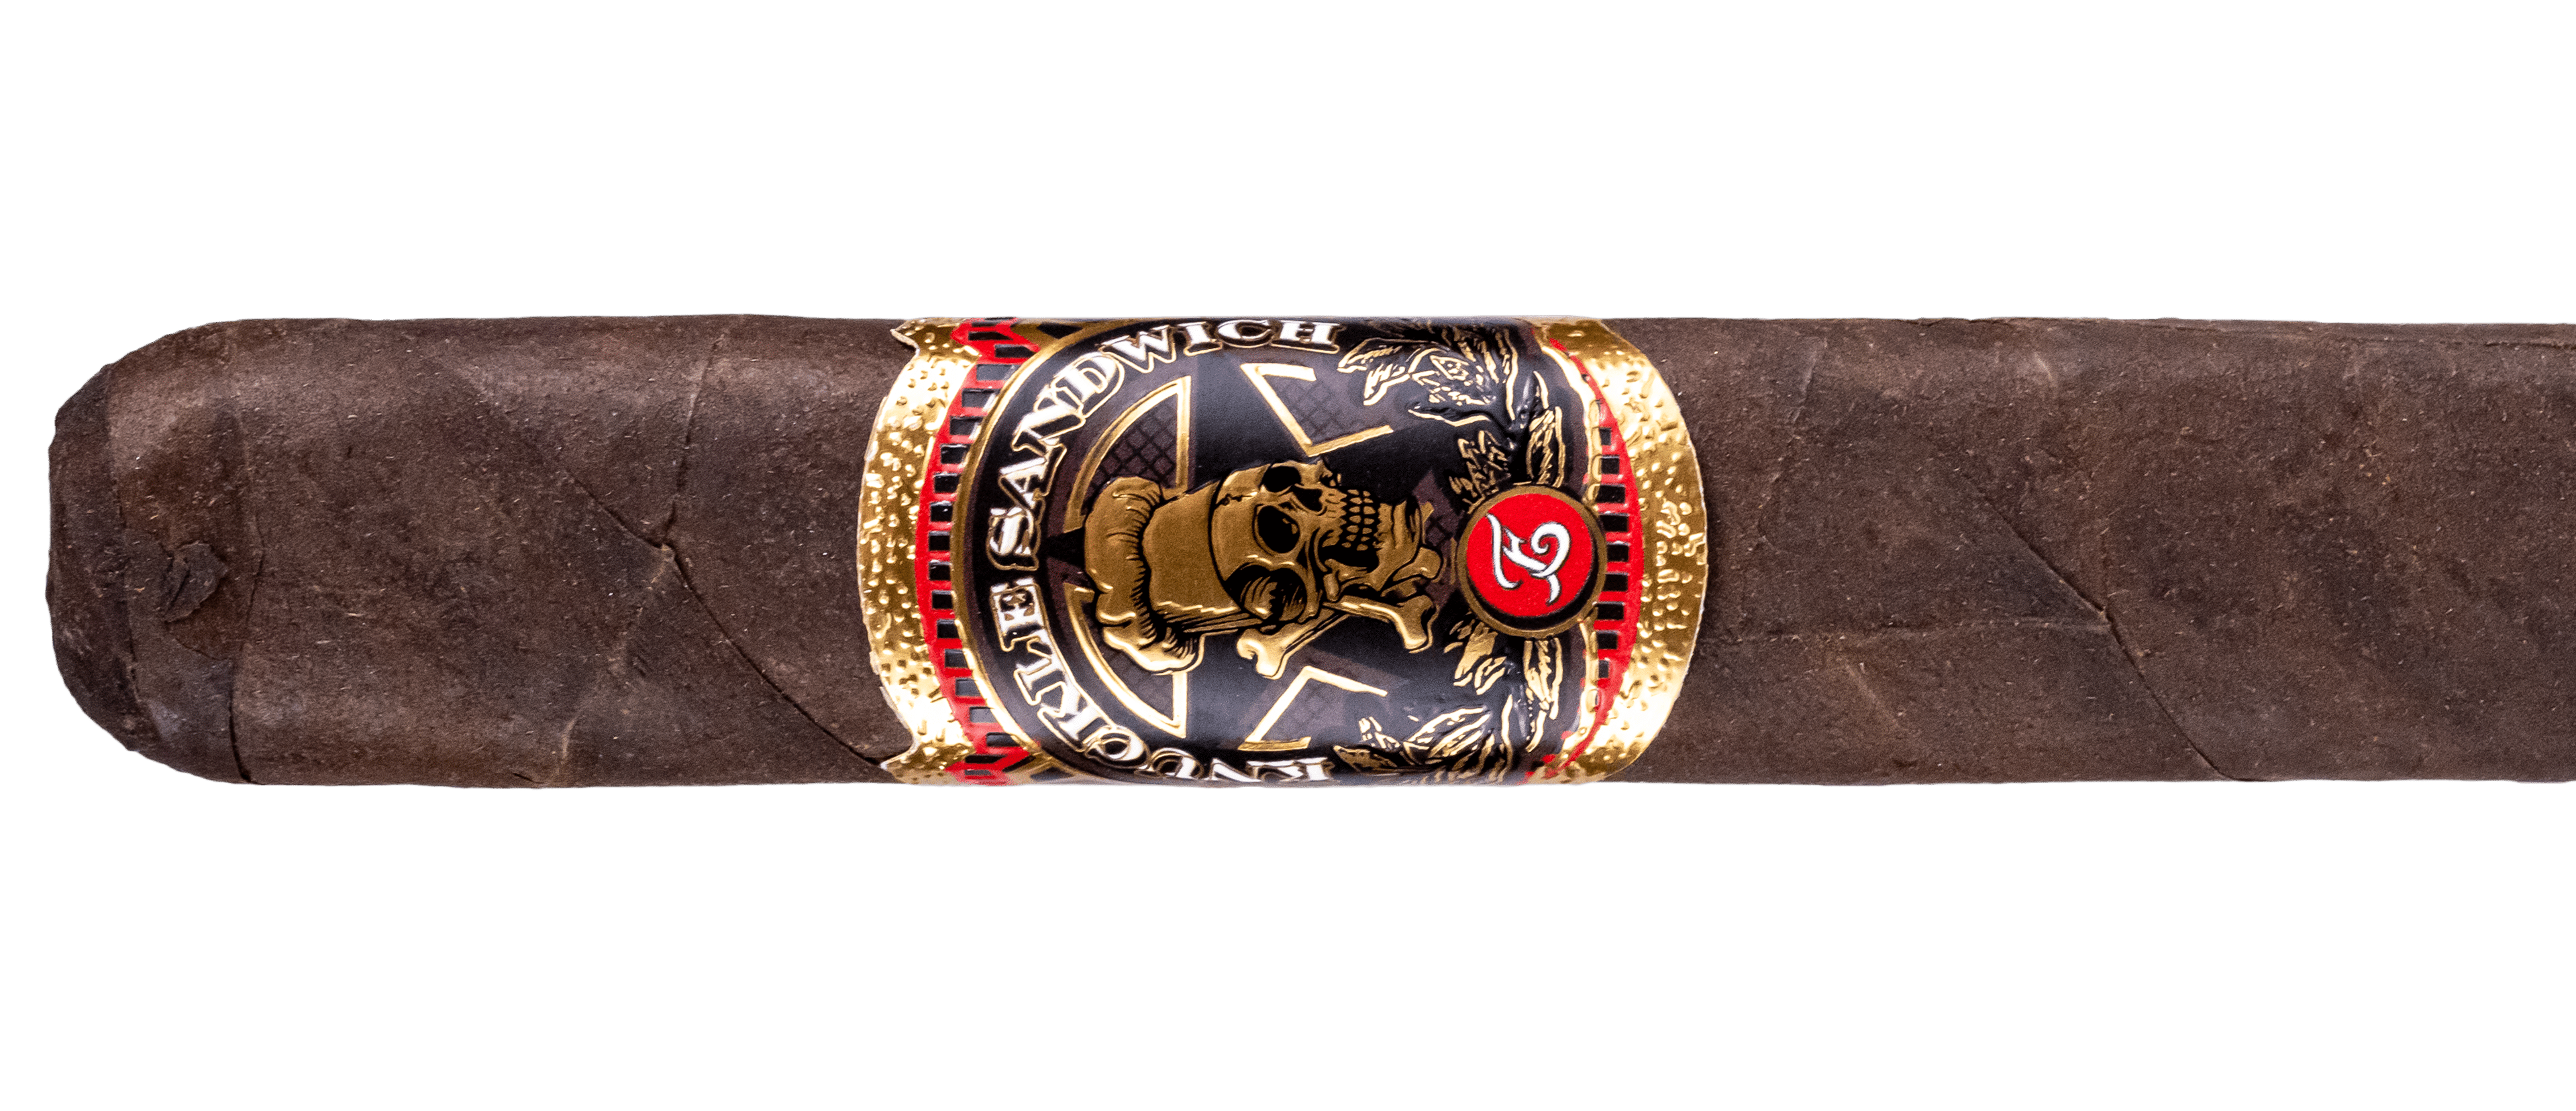 Knuckle Sandwich Maduro Toro H - Blind Cigar Review